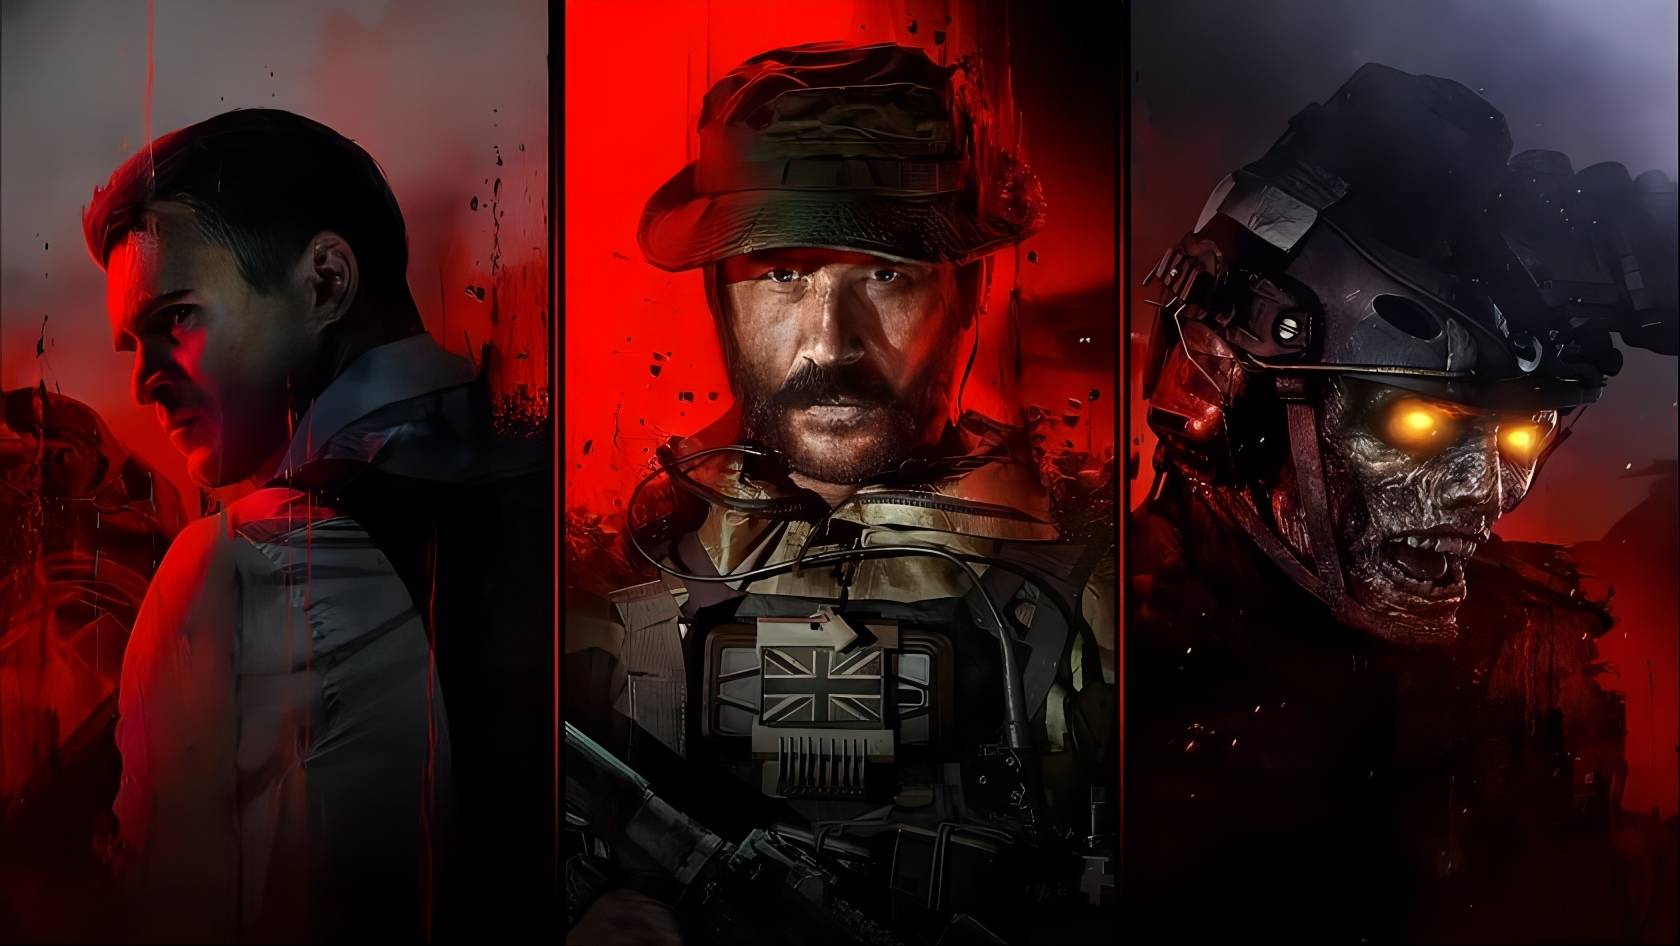 Zombies - Modern Warfare 3 Products on Sale